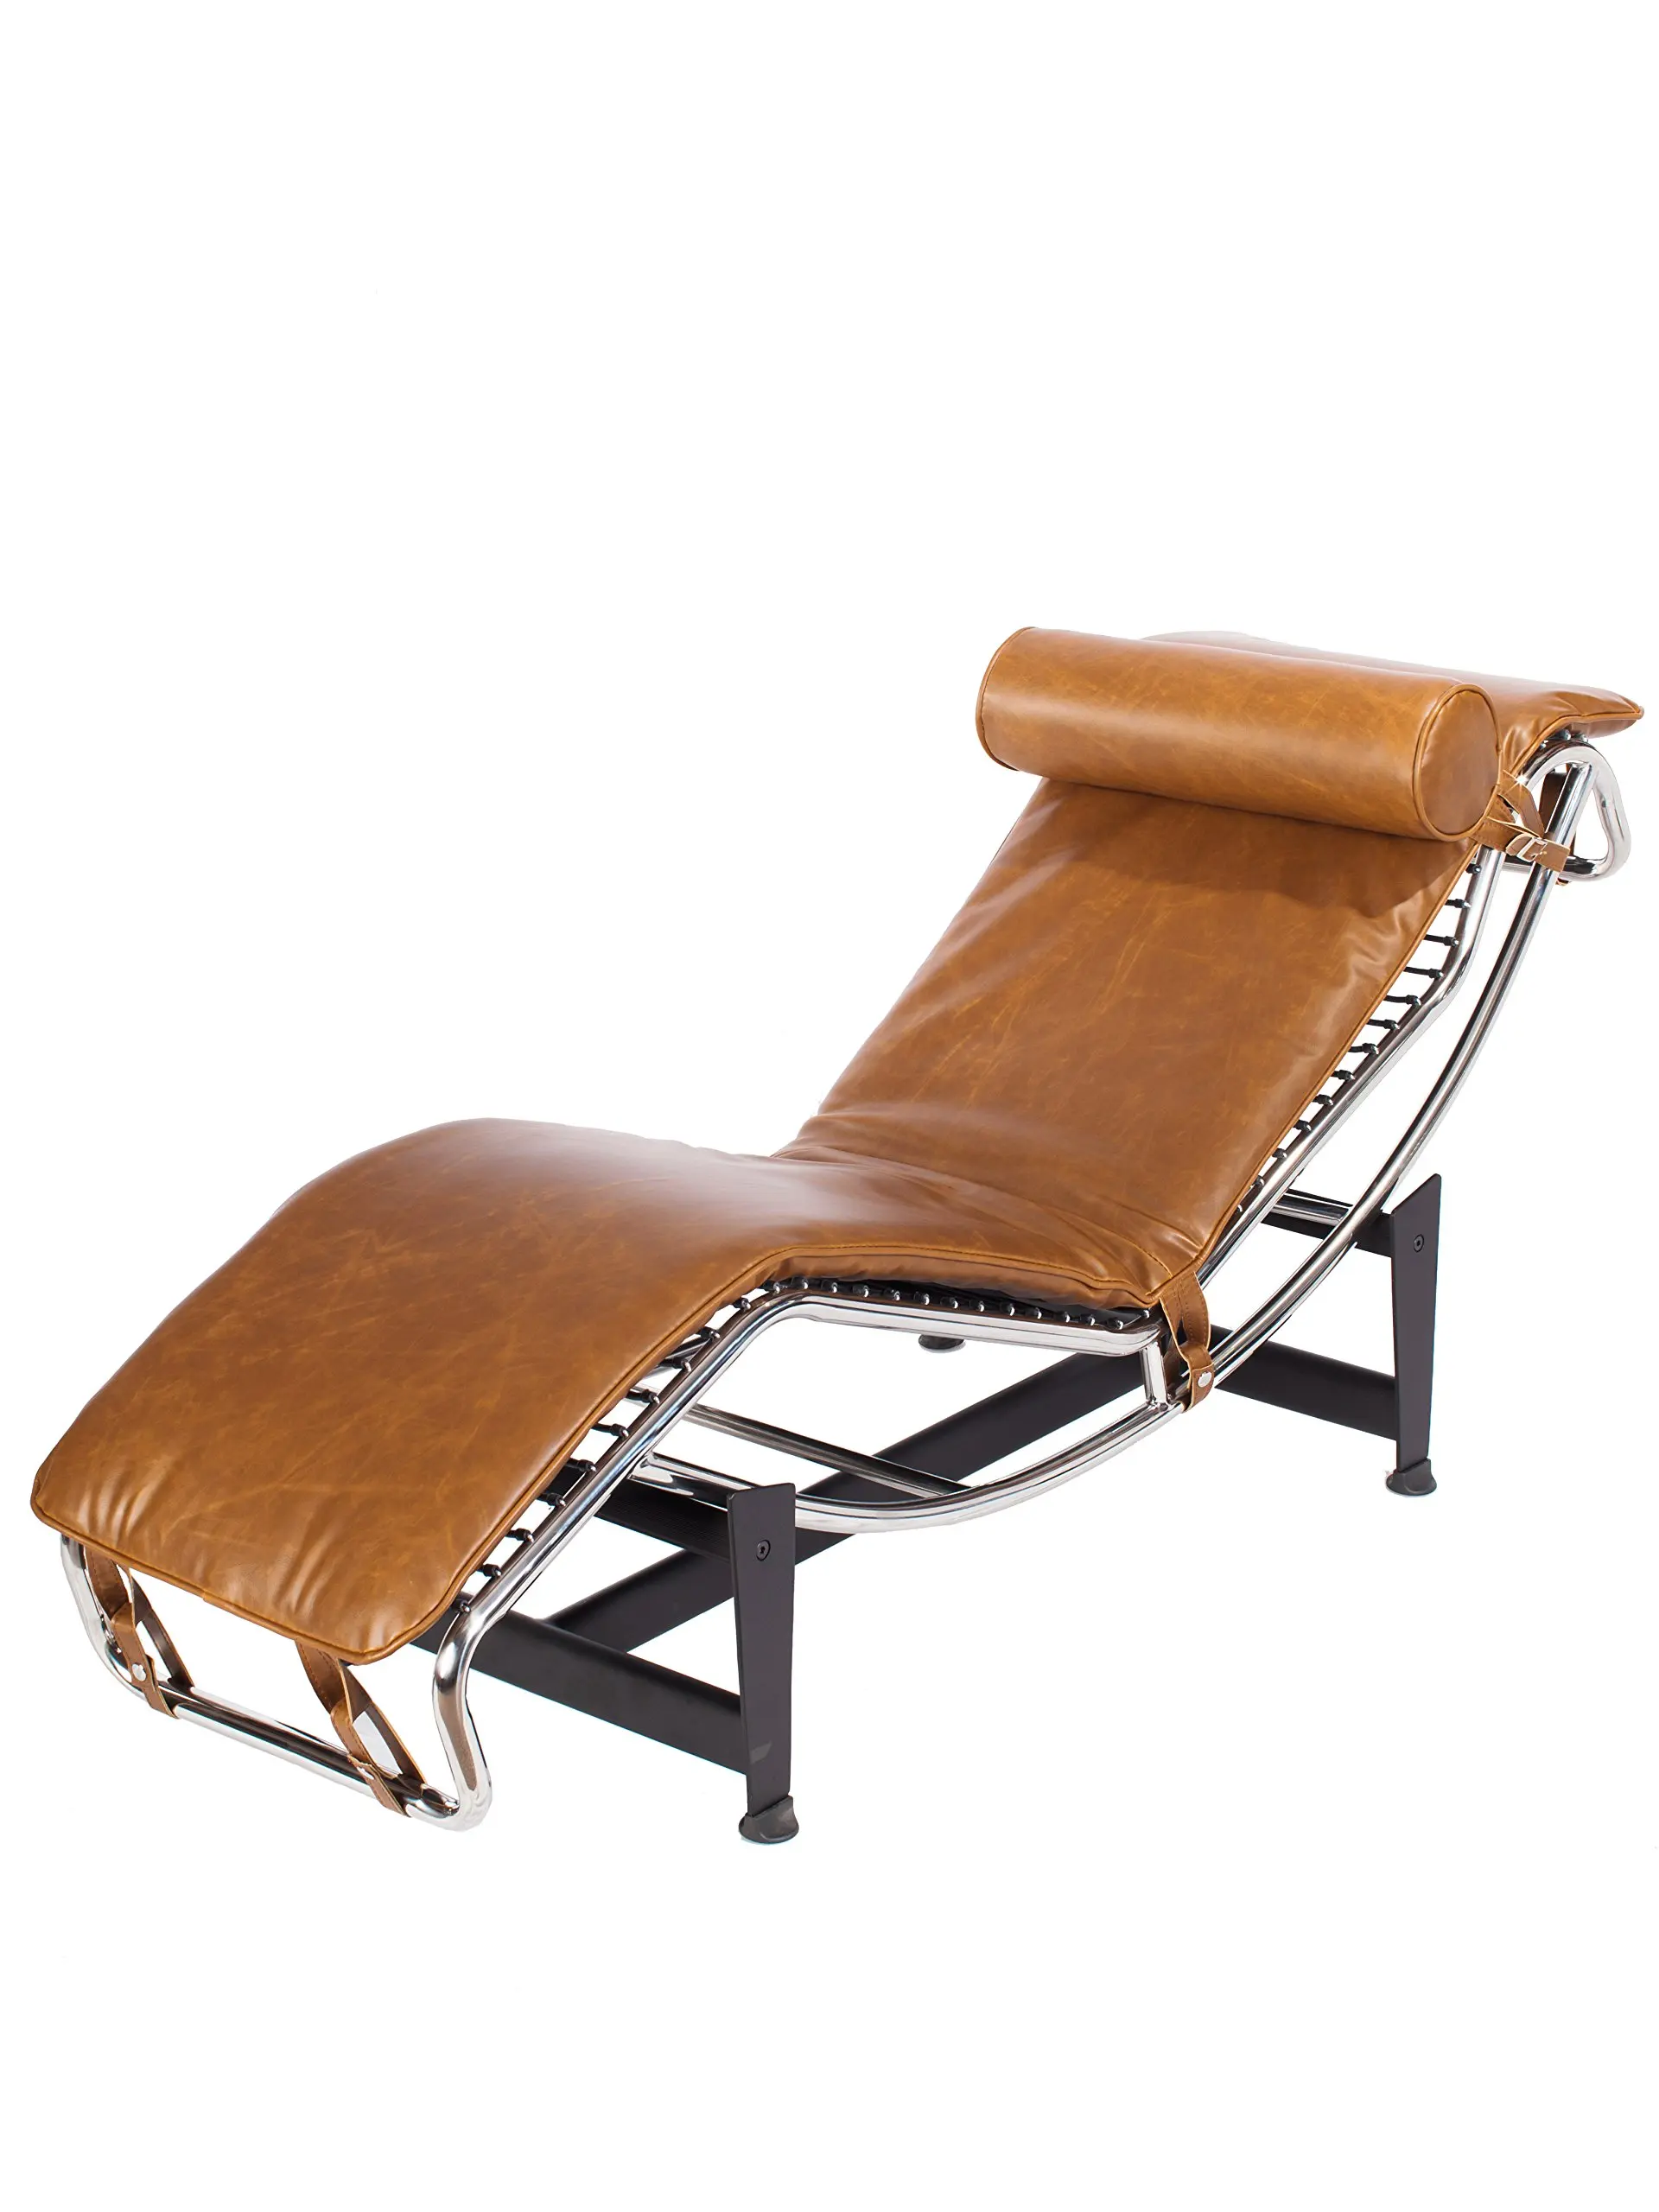 Mid Century Modern Chaise Lounge Chair - Joeryo ideas